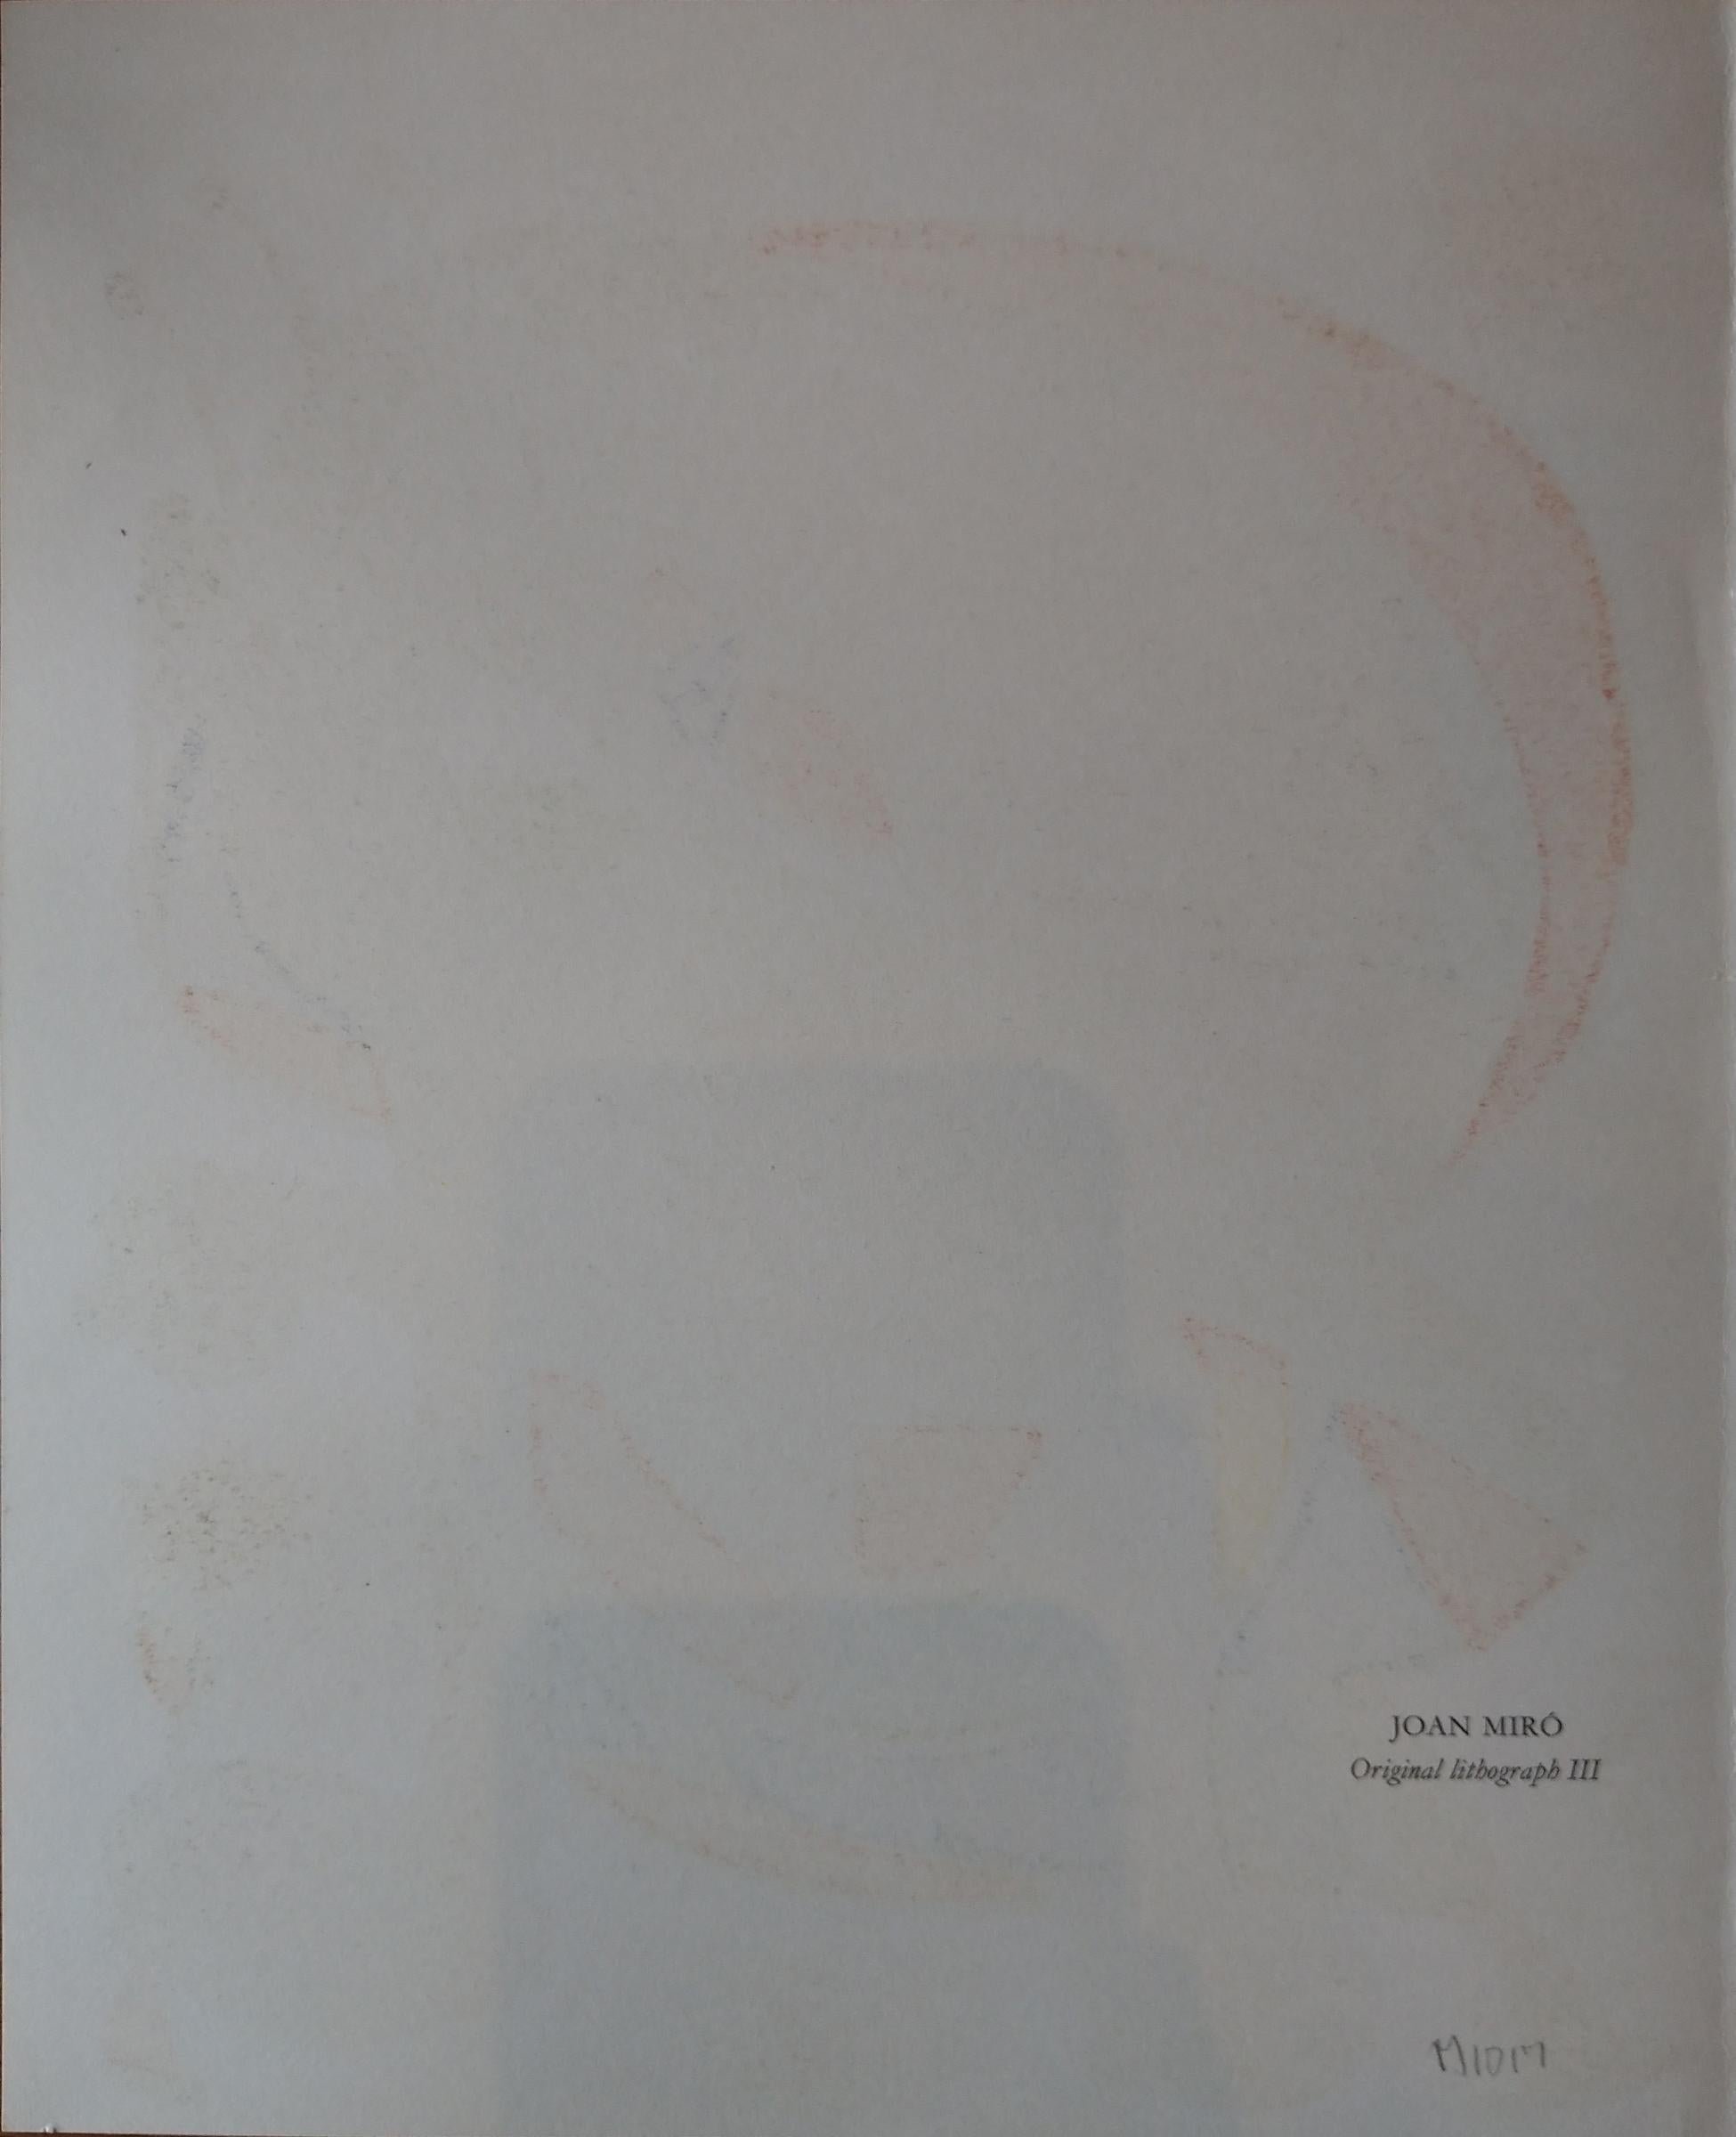 Lithograph III - Volume III - Black Abstract Print by Joan Miró